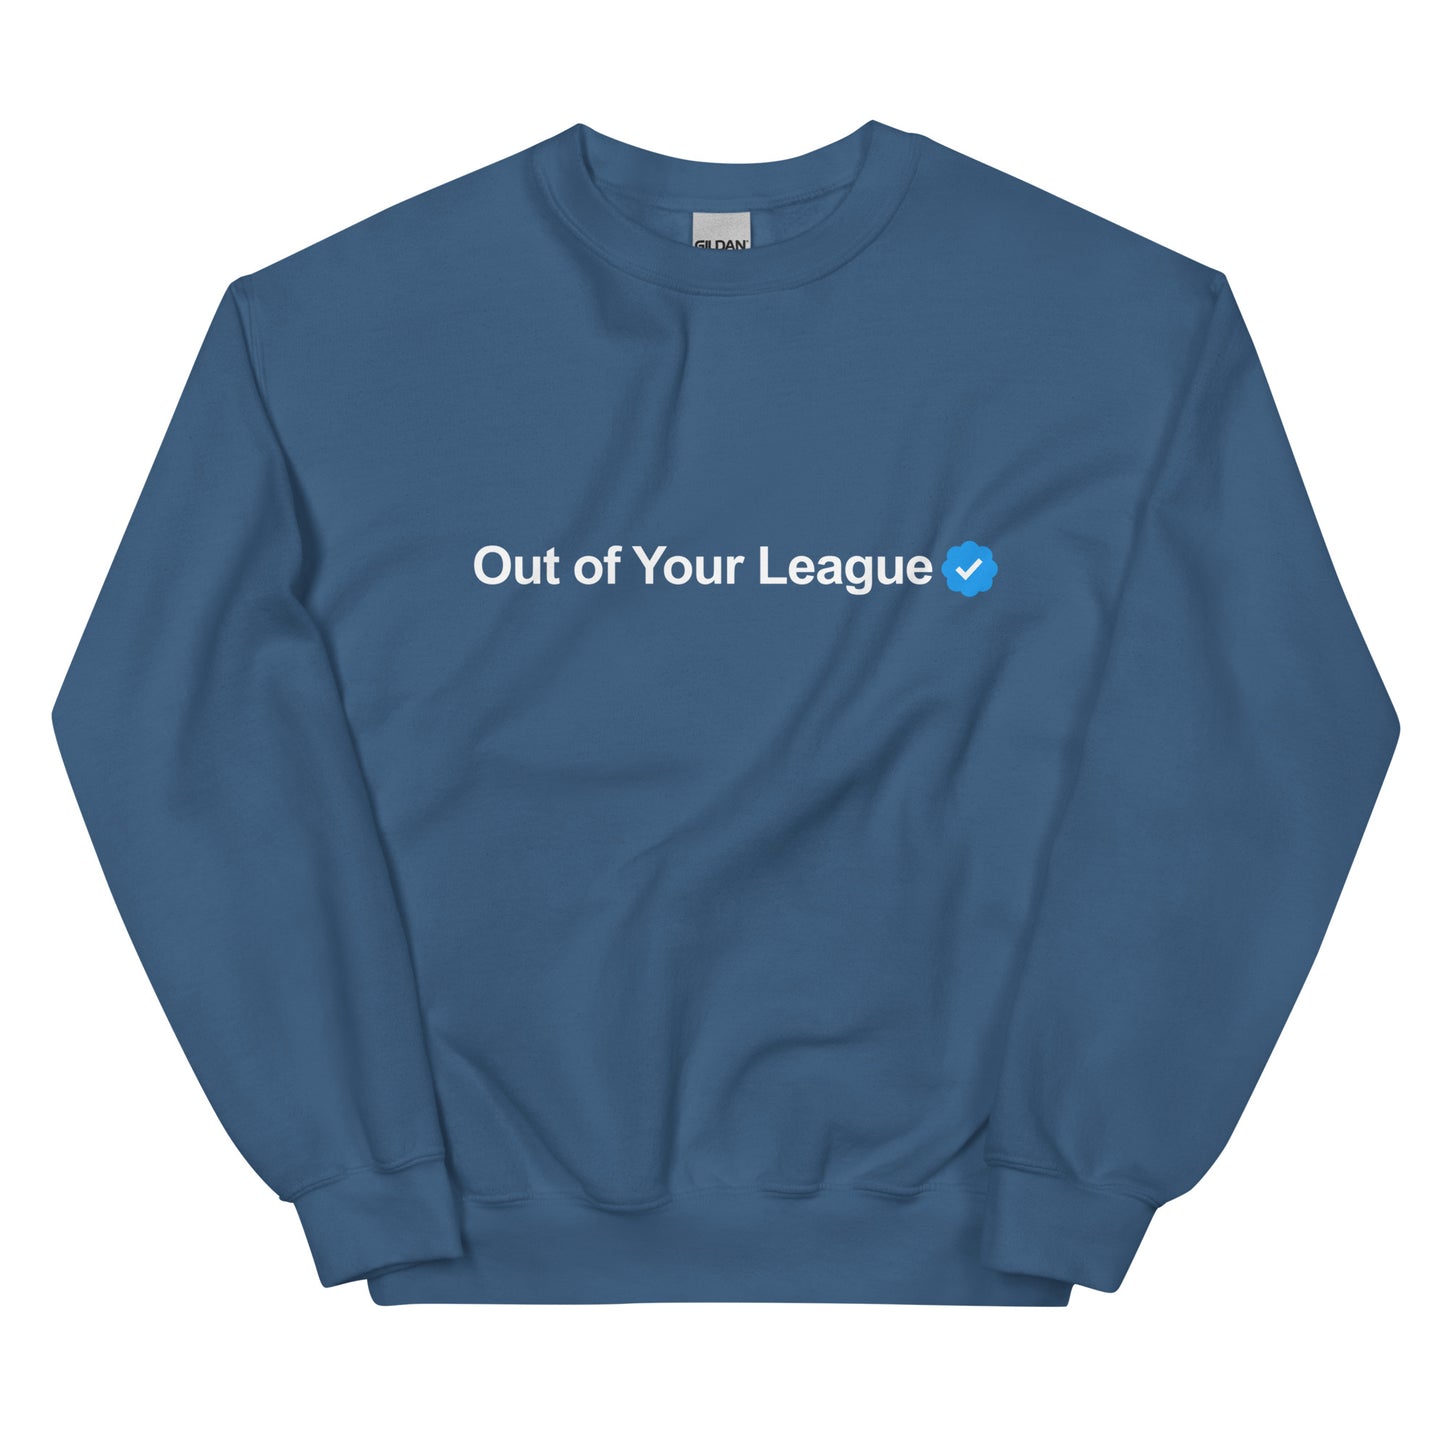 Out of Your League Unisex Sweatshirt